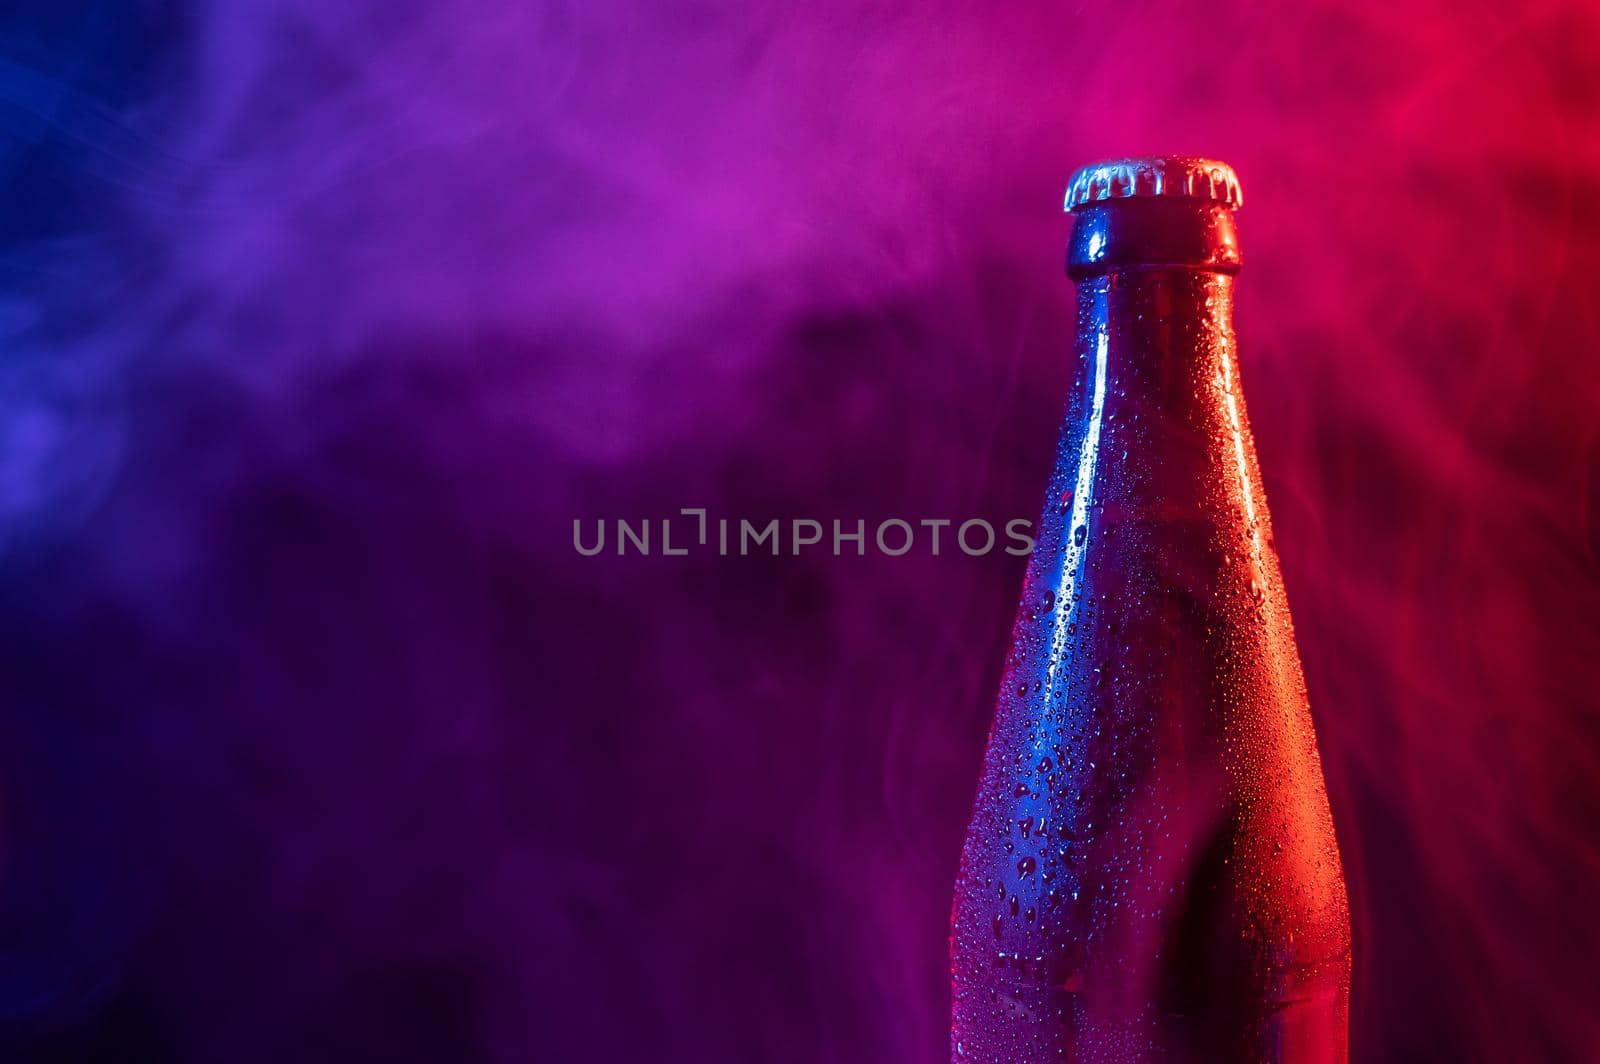 Glass bottle of beer in blue pink mist.